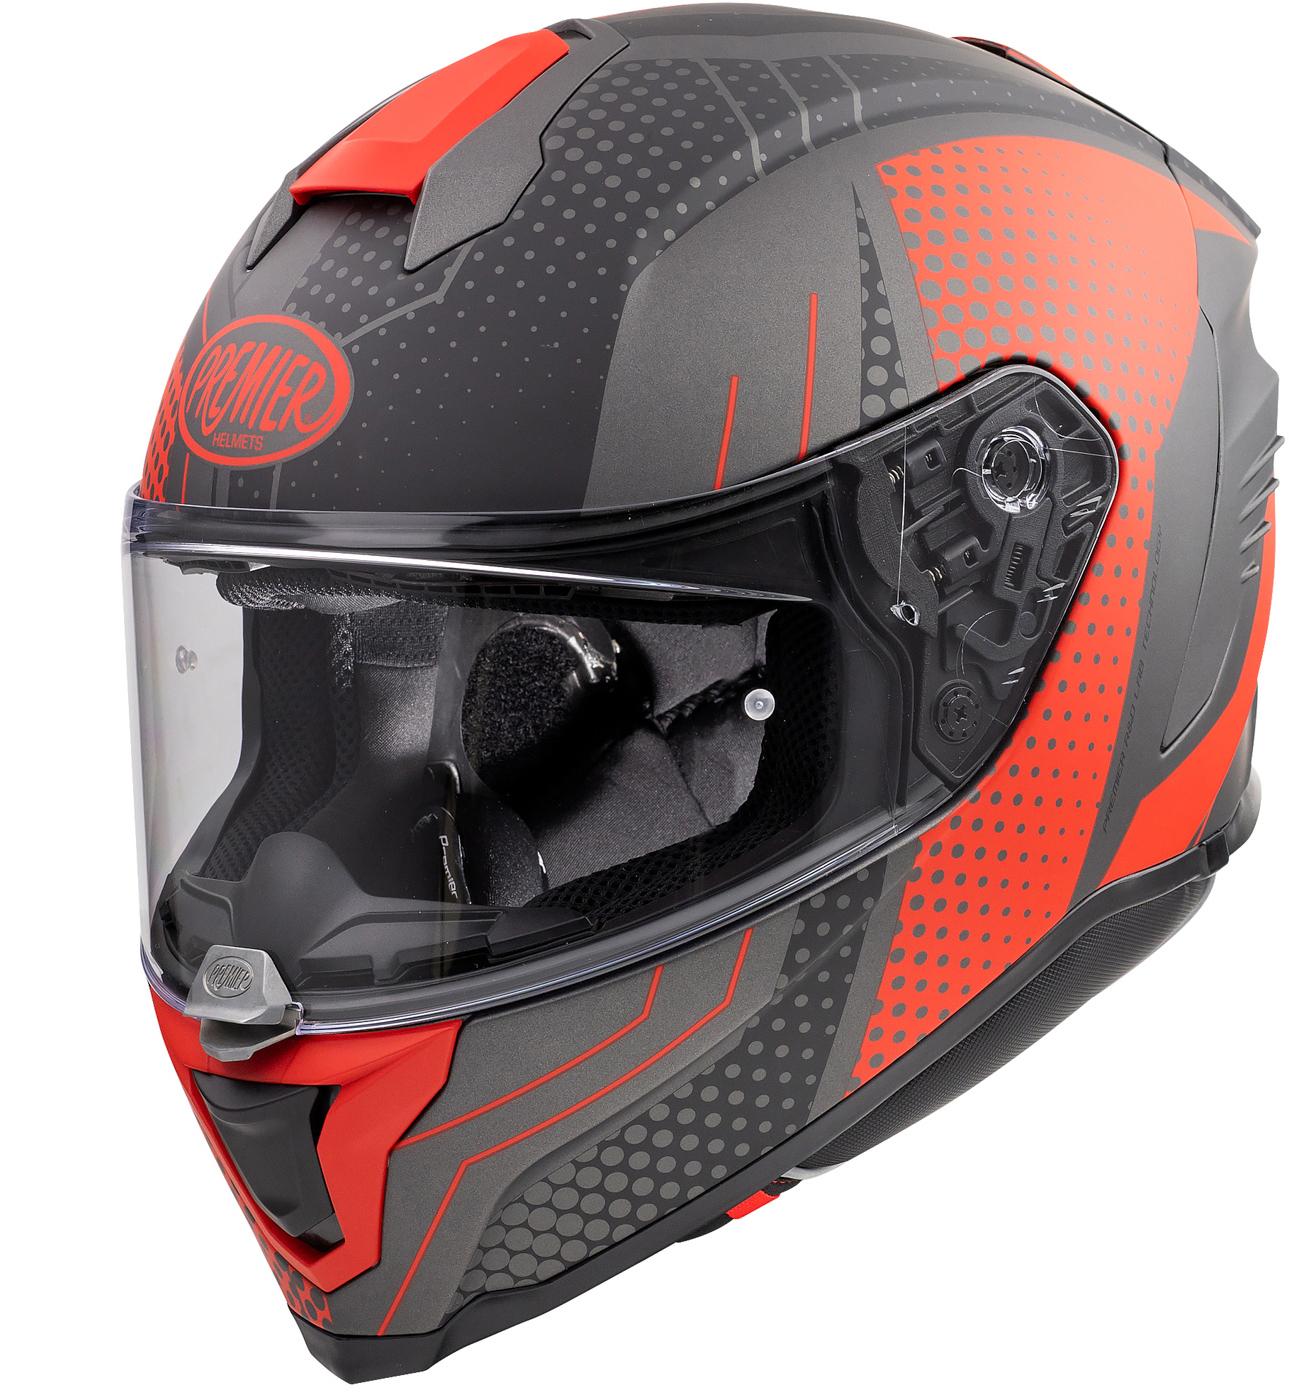 Premier Hyper Bp Full Face Motorcycle Helmet - Black/Red, M